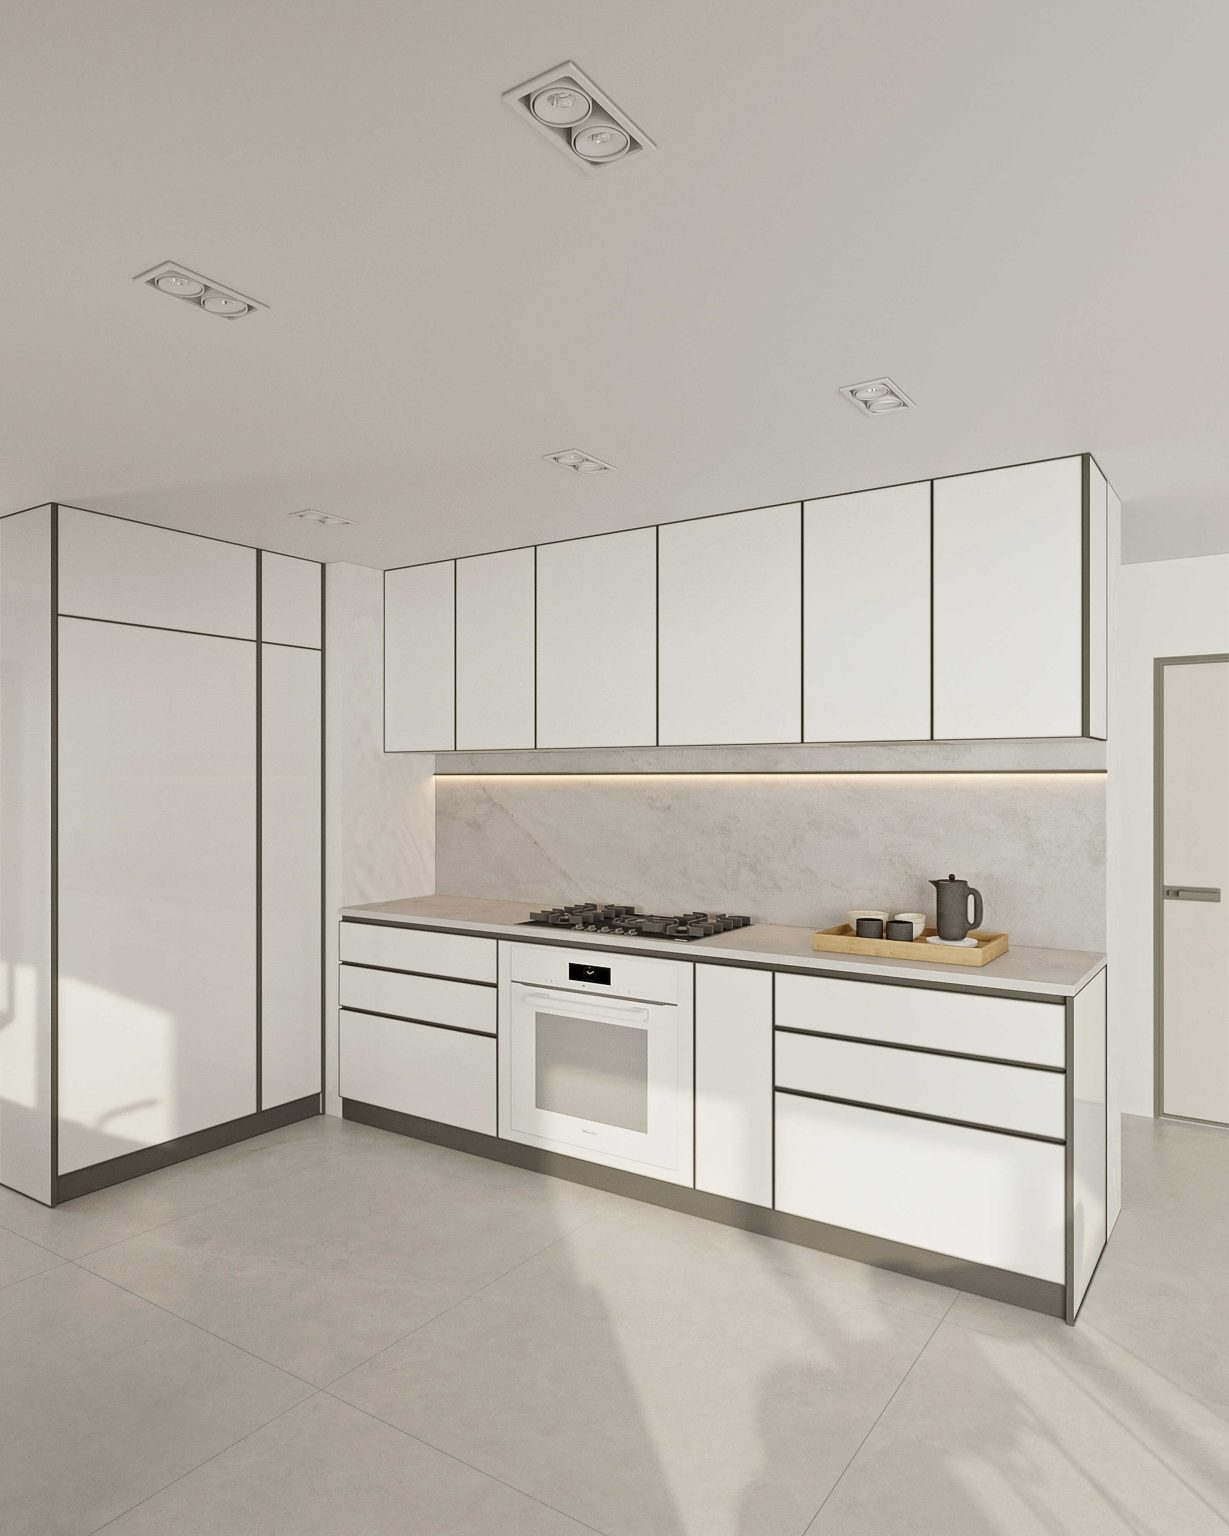 An elegant and timeless kitchen designed by Natalia Starinova, showcasing sophistication in Miami